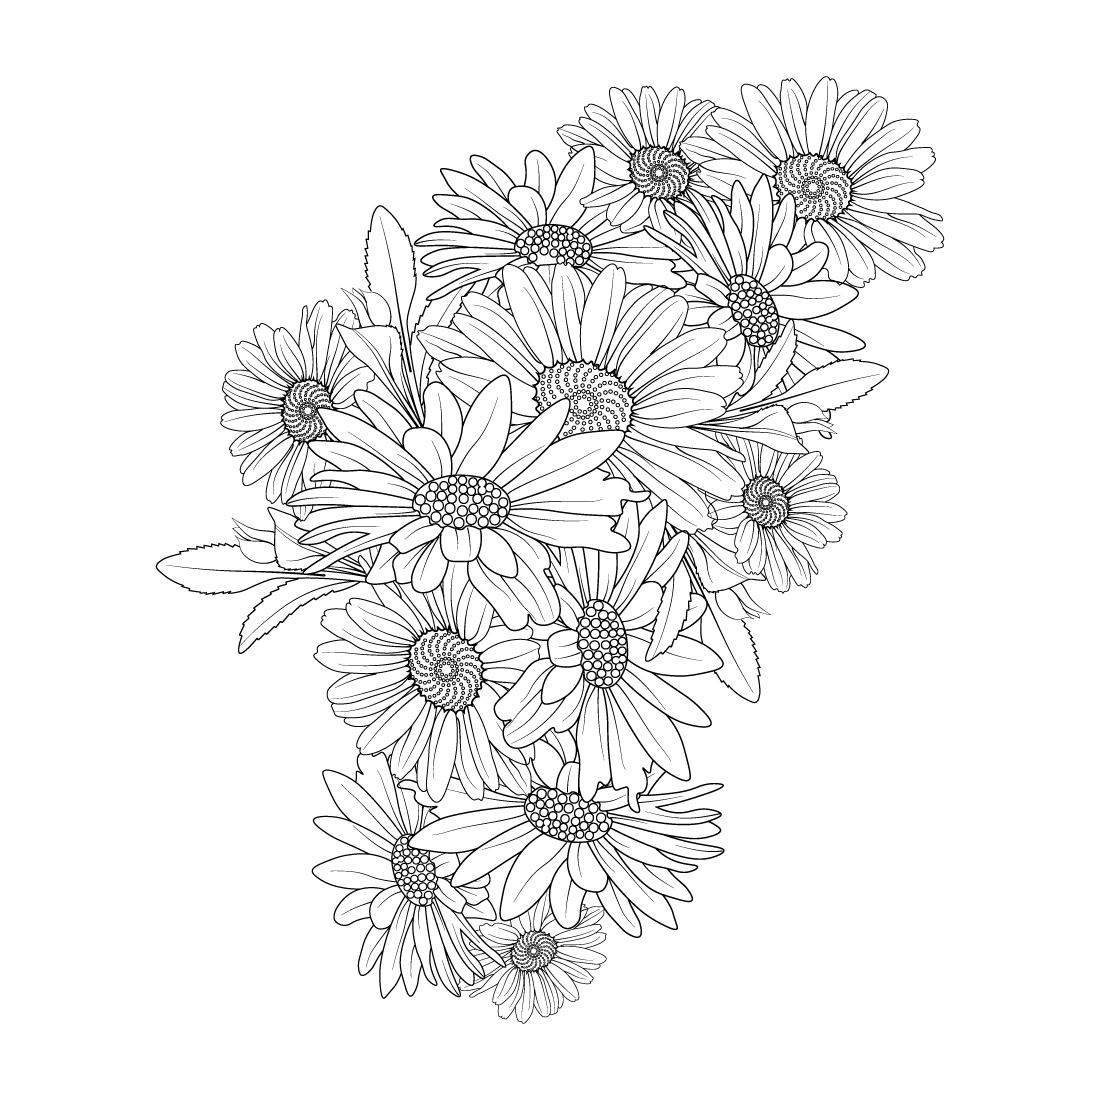 Illustration sketch contour bouquet of daisy flowers, gerbera daisy flower line art, preview image.